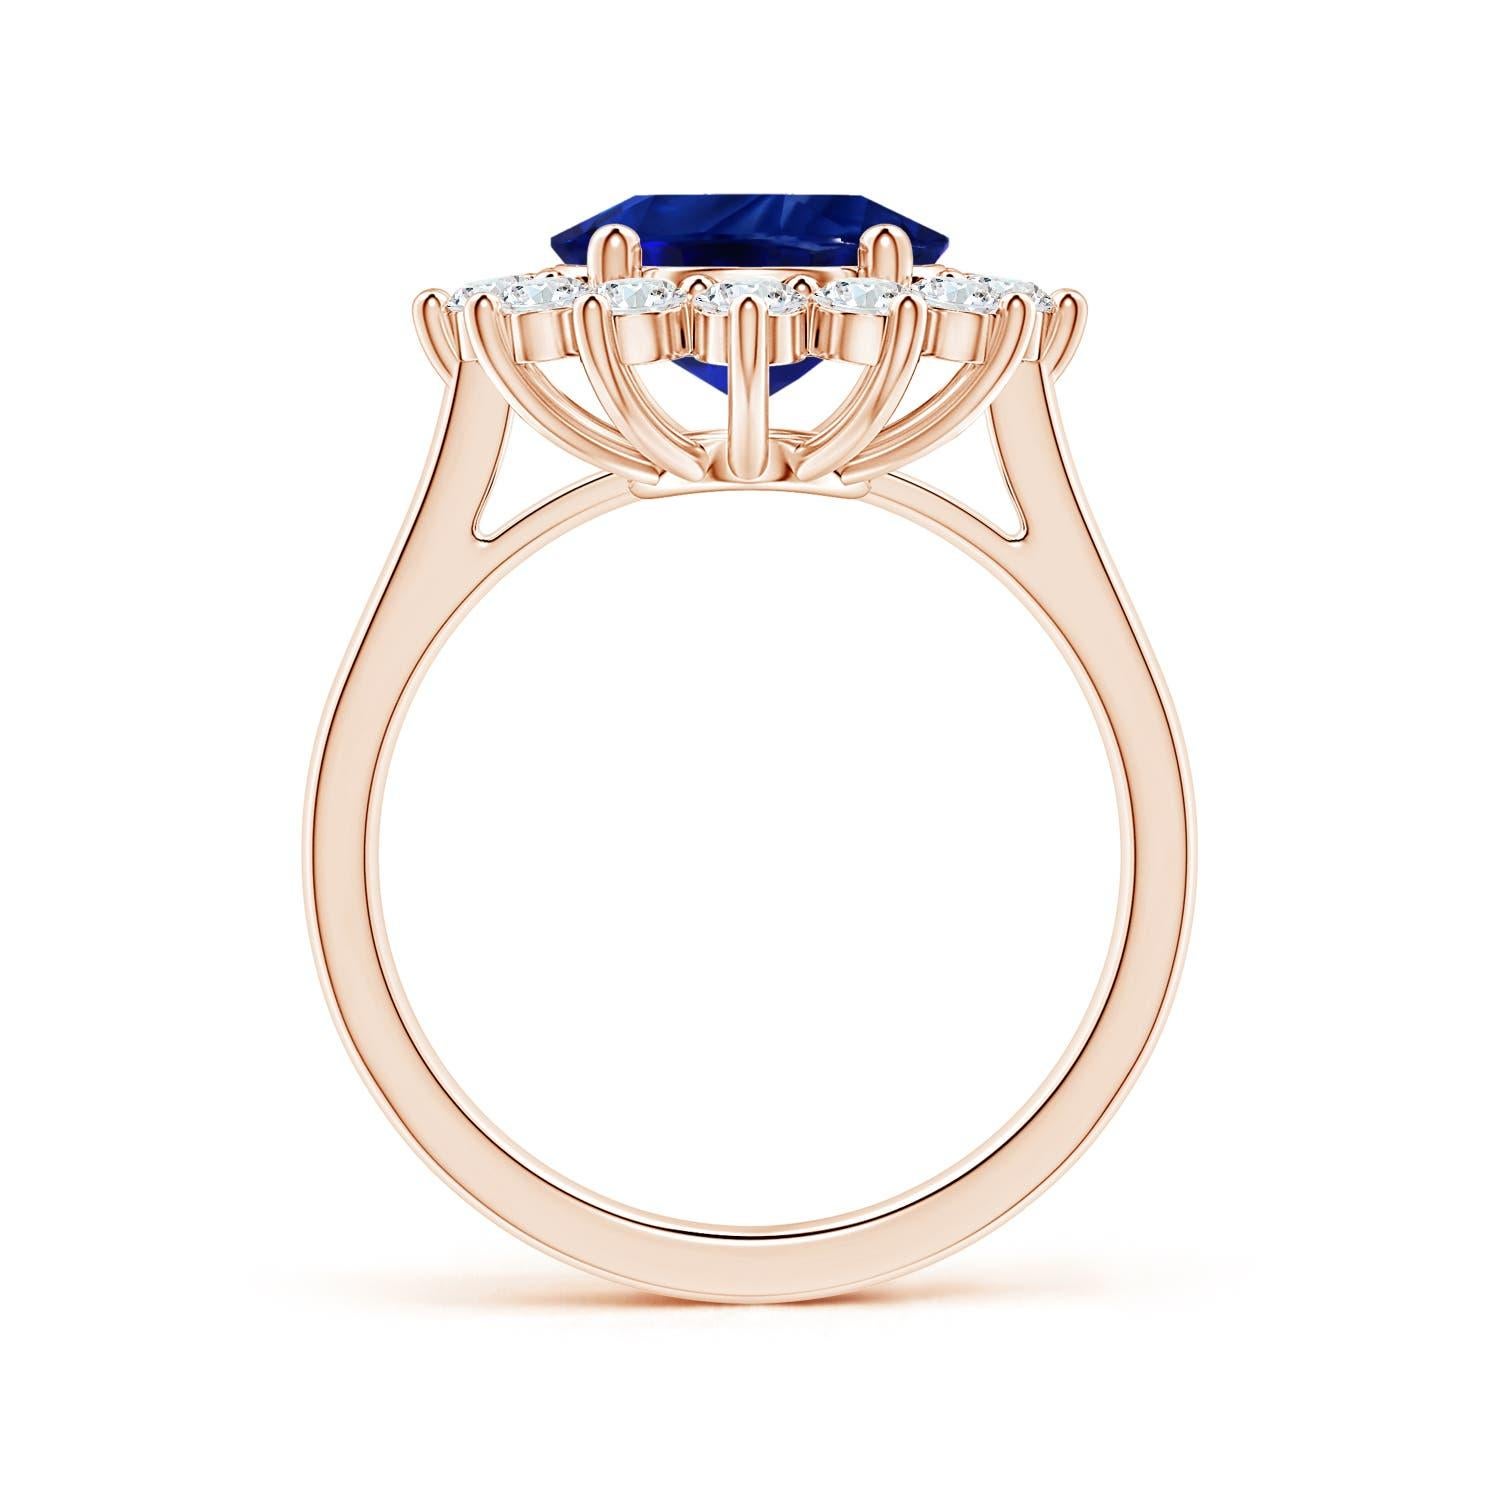 Im Angebot: ANGARA Prinzessin Diana inspirierter GIA-zertifizierter blauer Saphir Halo Roségold Ring () 2